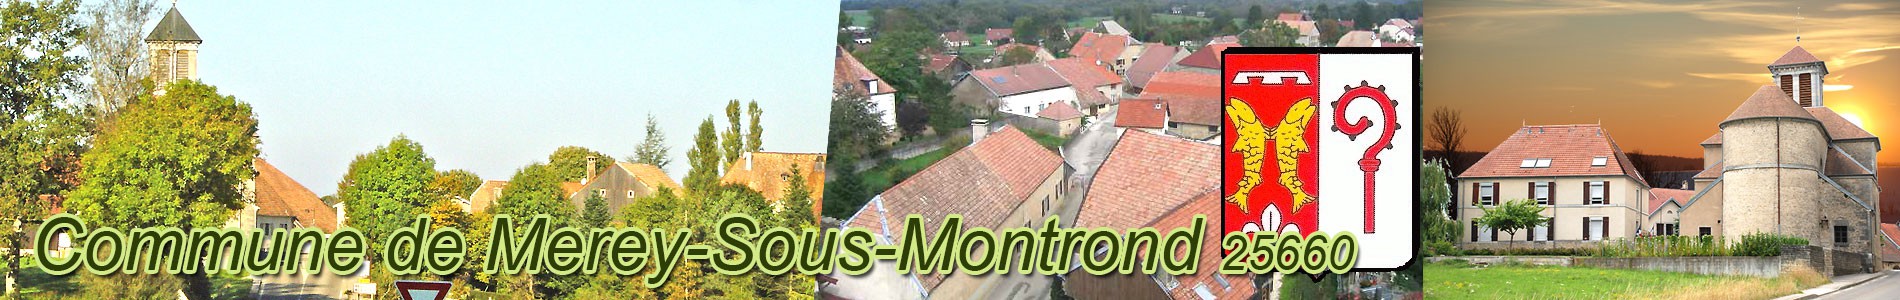 Merey-Sous-Montrond - 25660